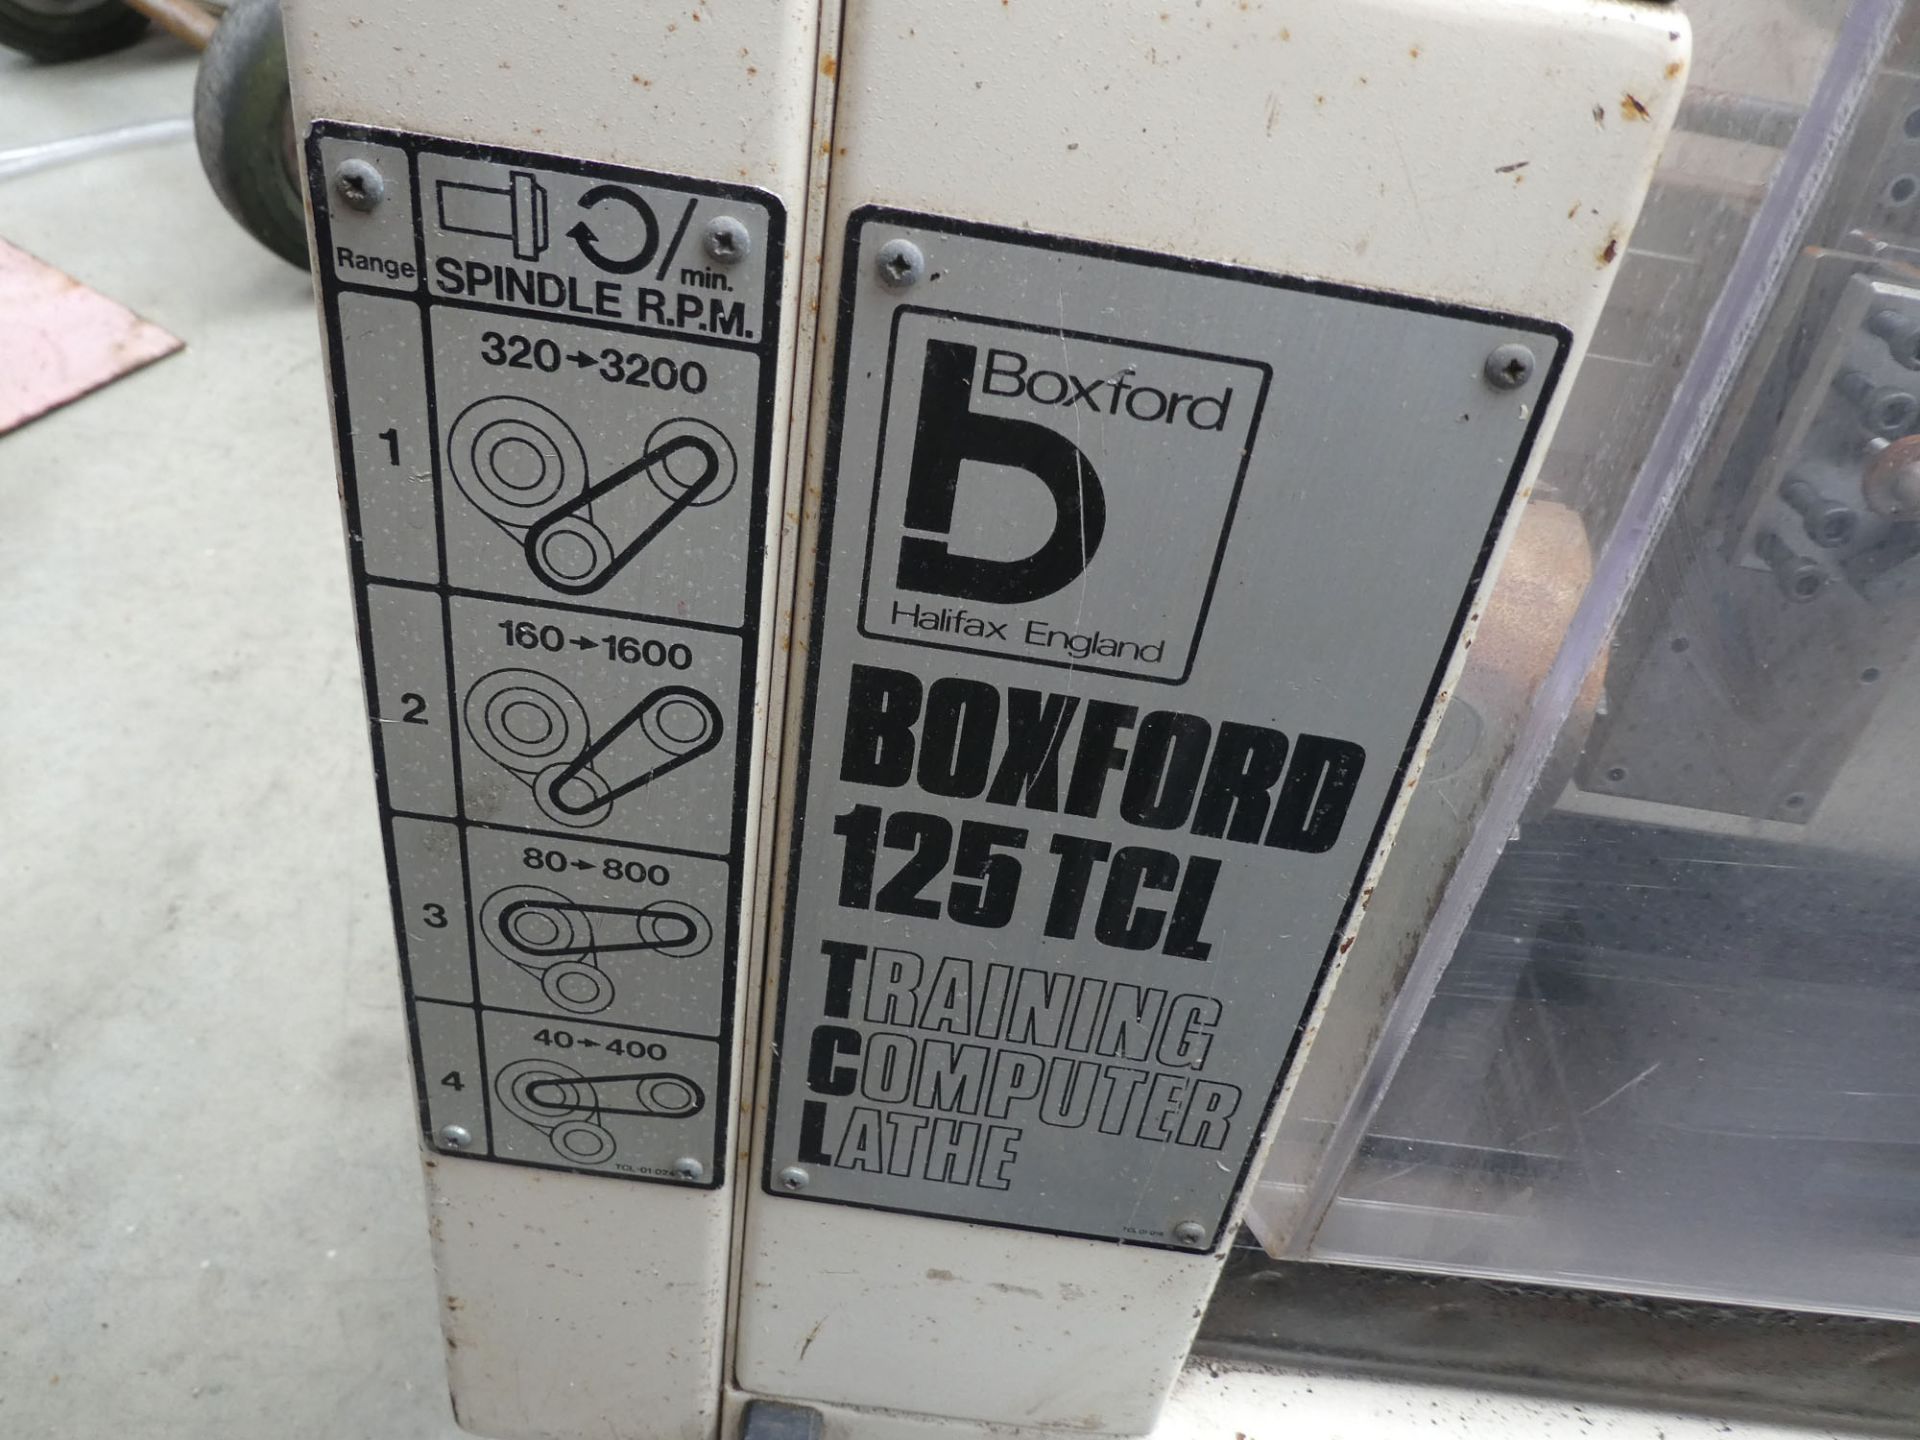 Boxford 125 TCL lathe - Image 2 of 3